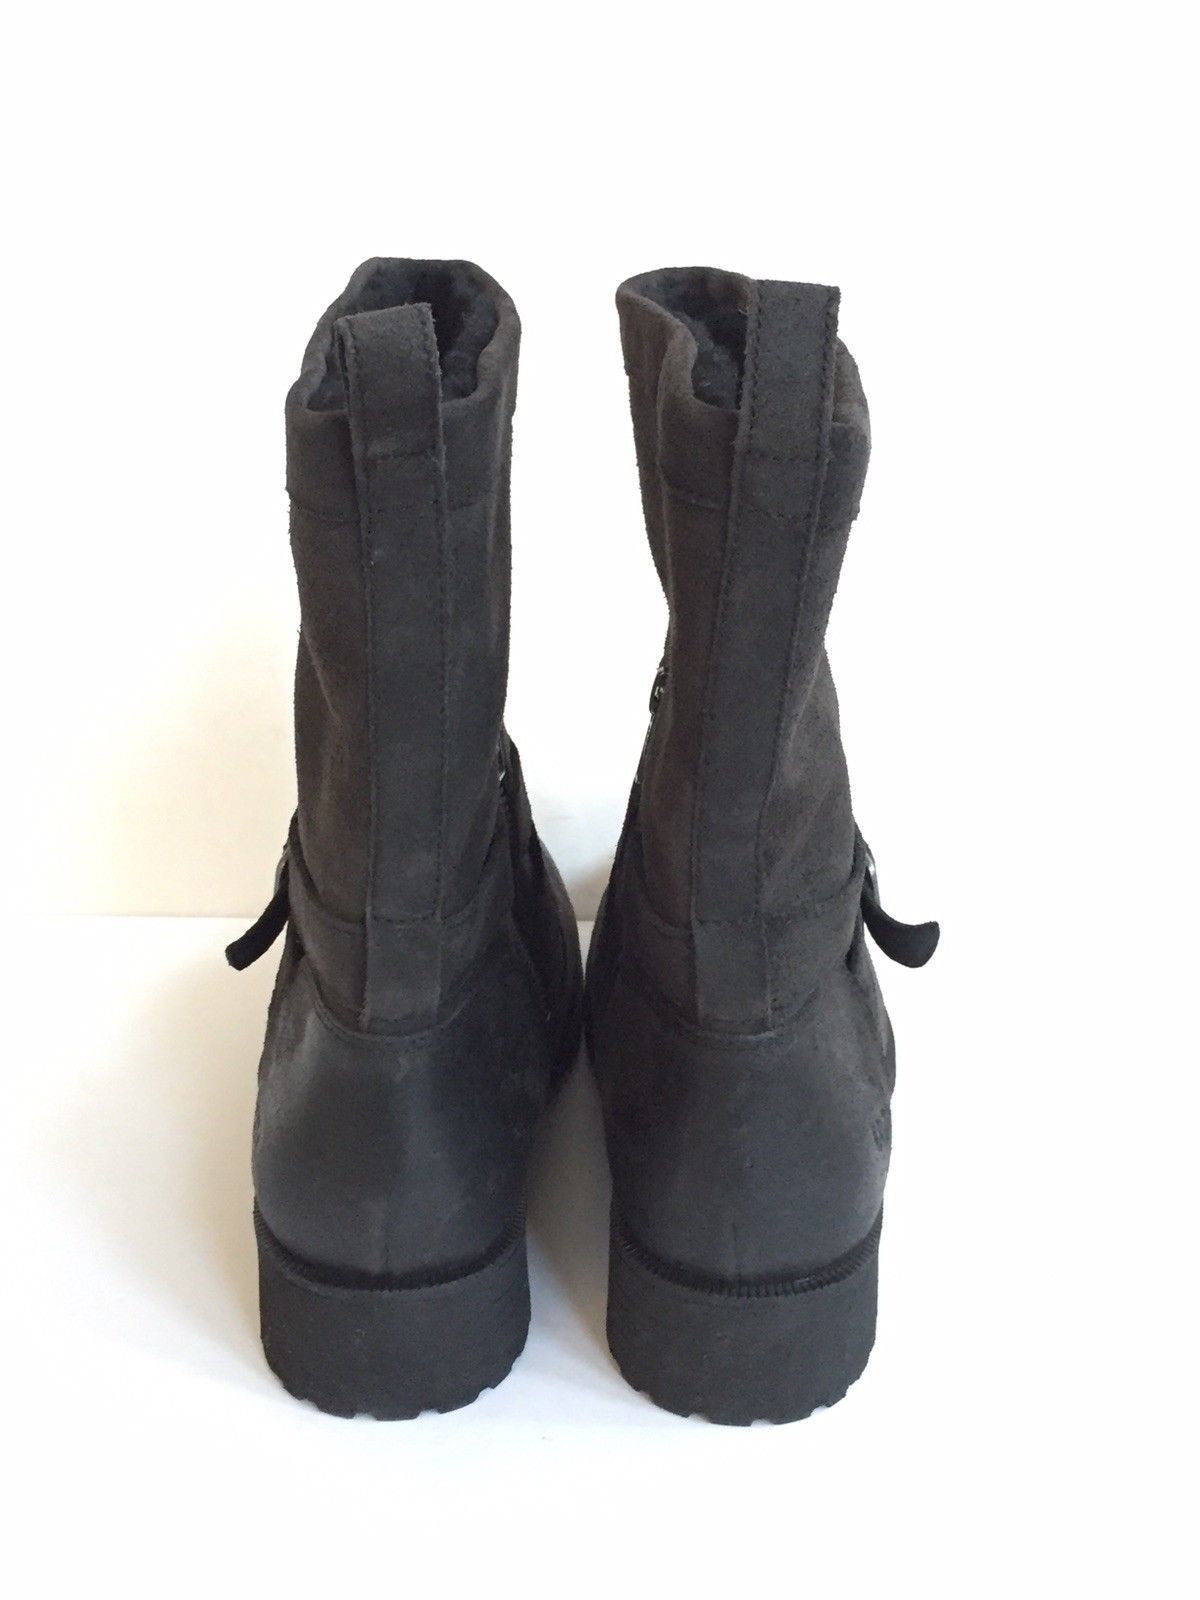 glendale waterproof leather boot